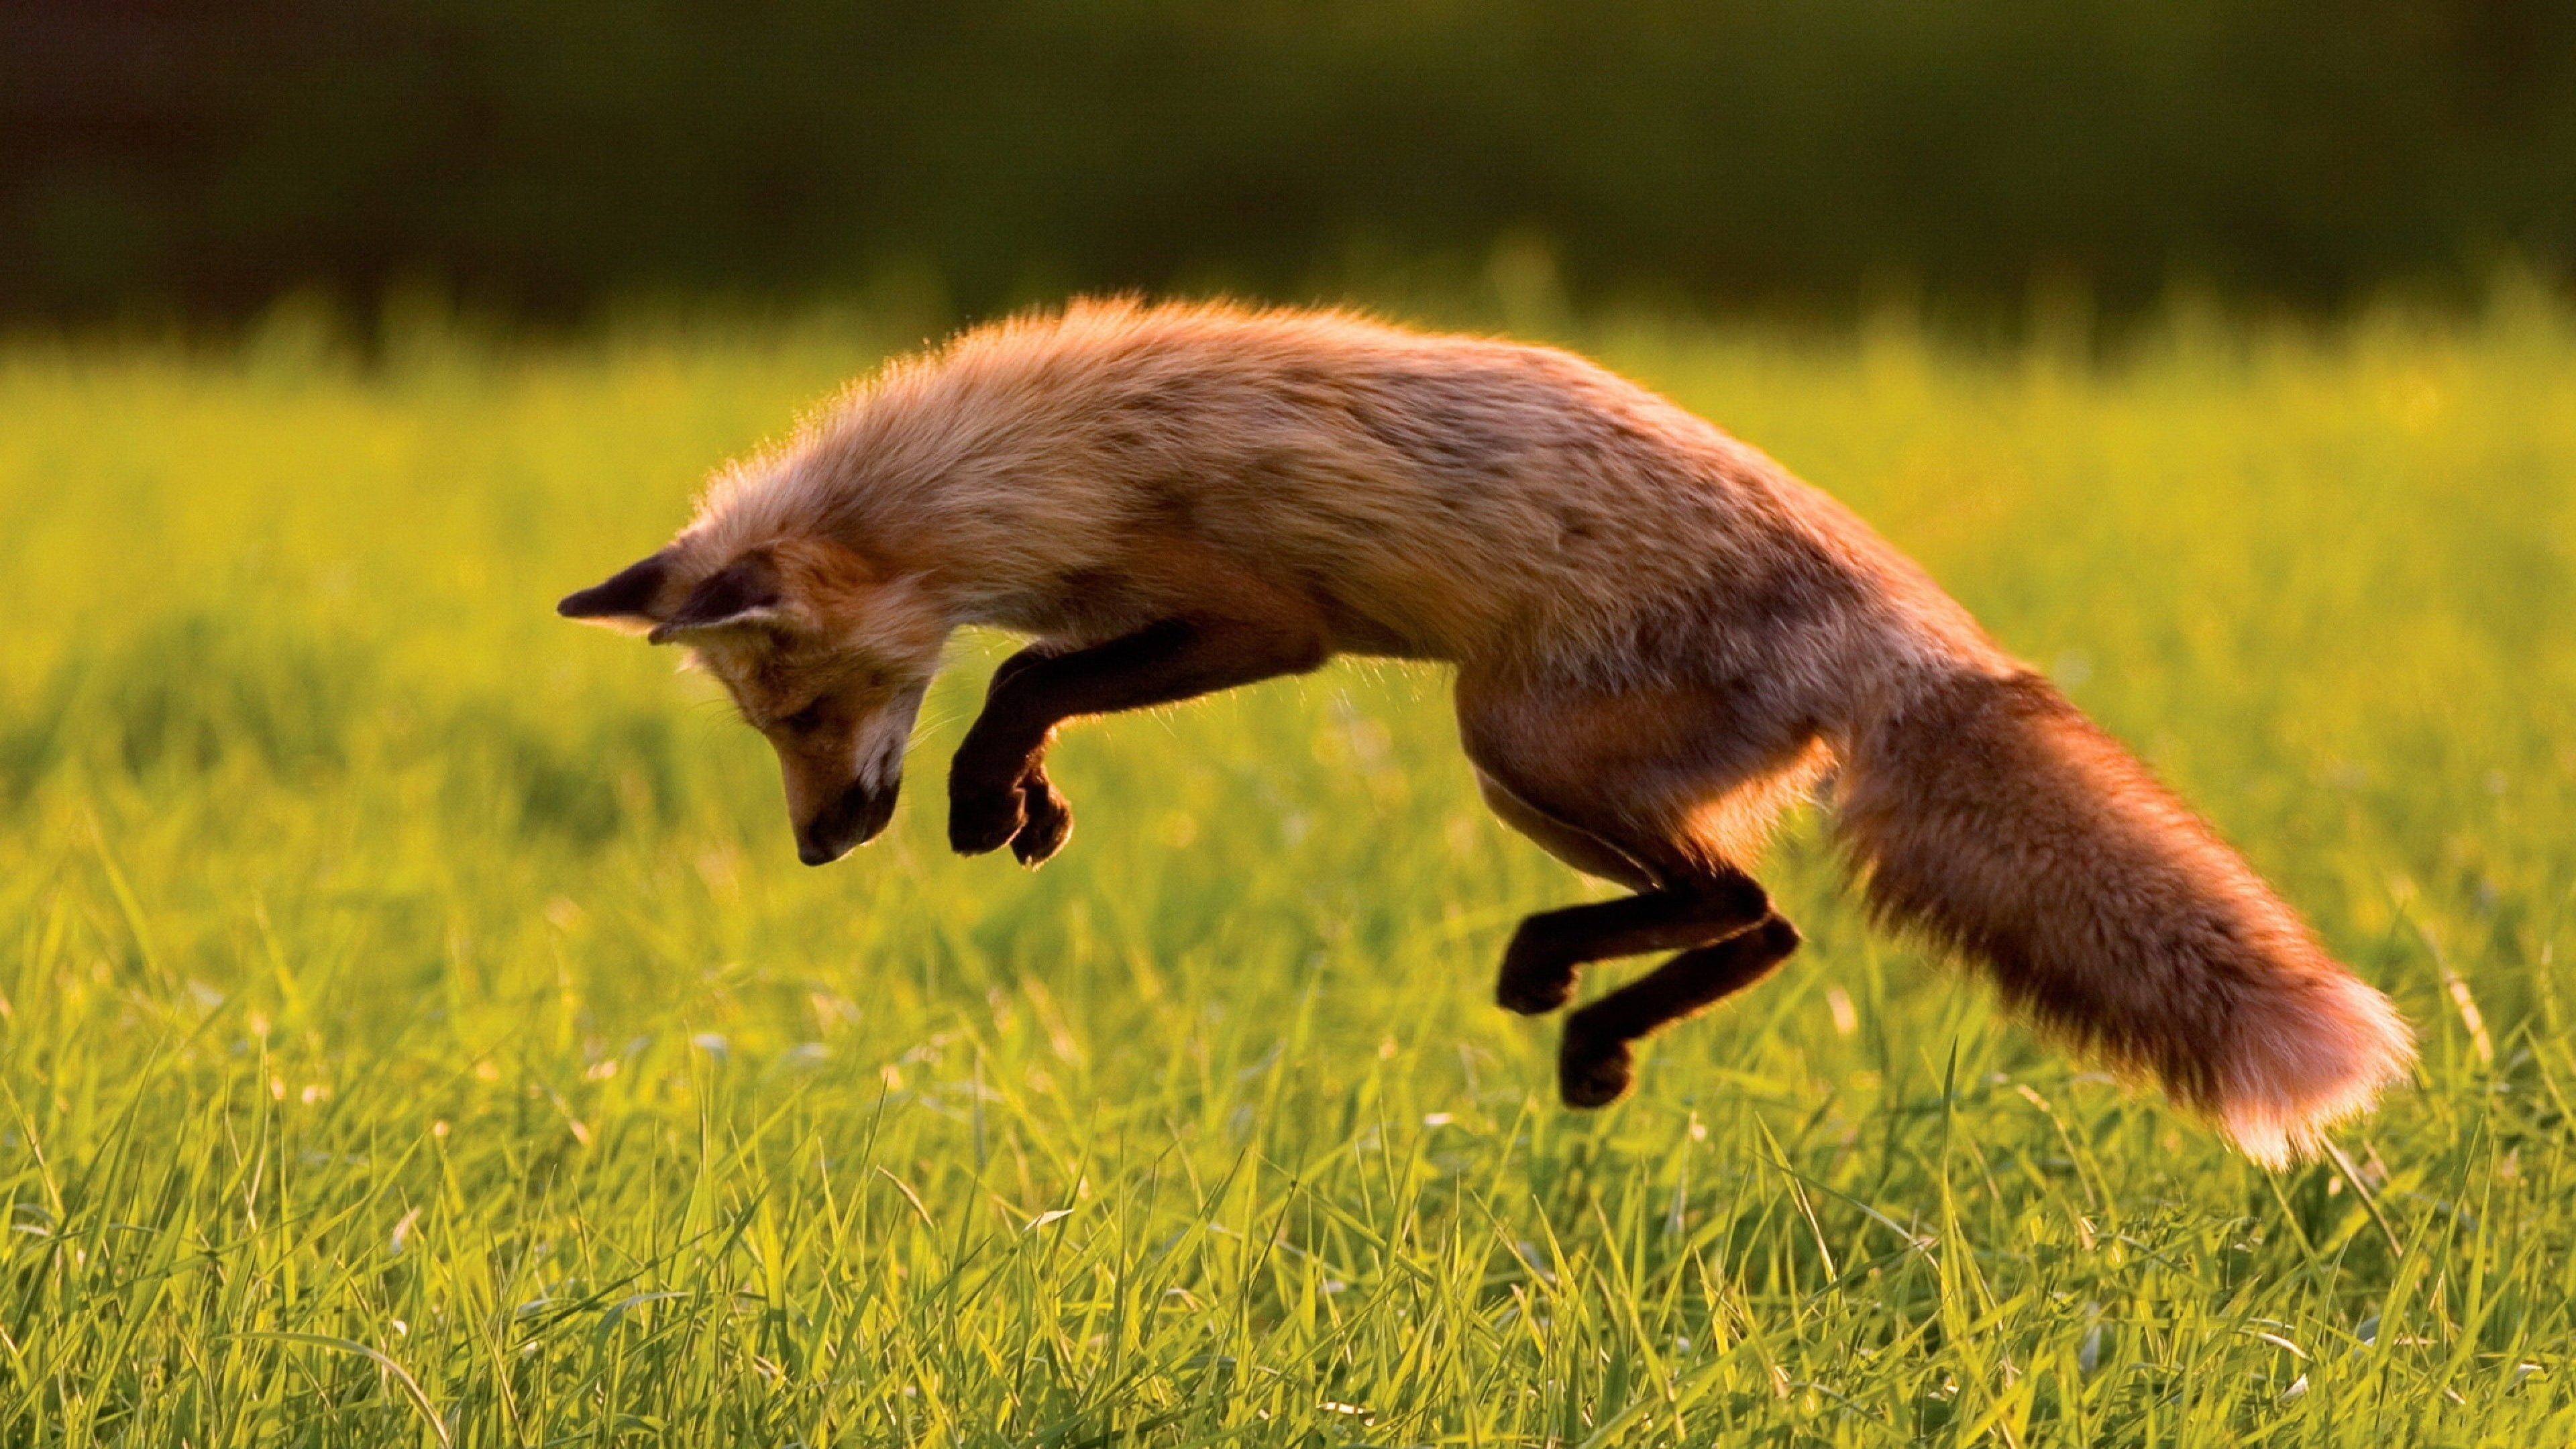 3840x2160, Download Jumping Fox Wallpaper - Fox Jumping In Grass - HD Wallpaper 